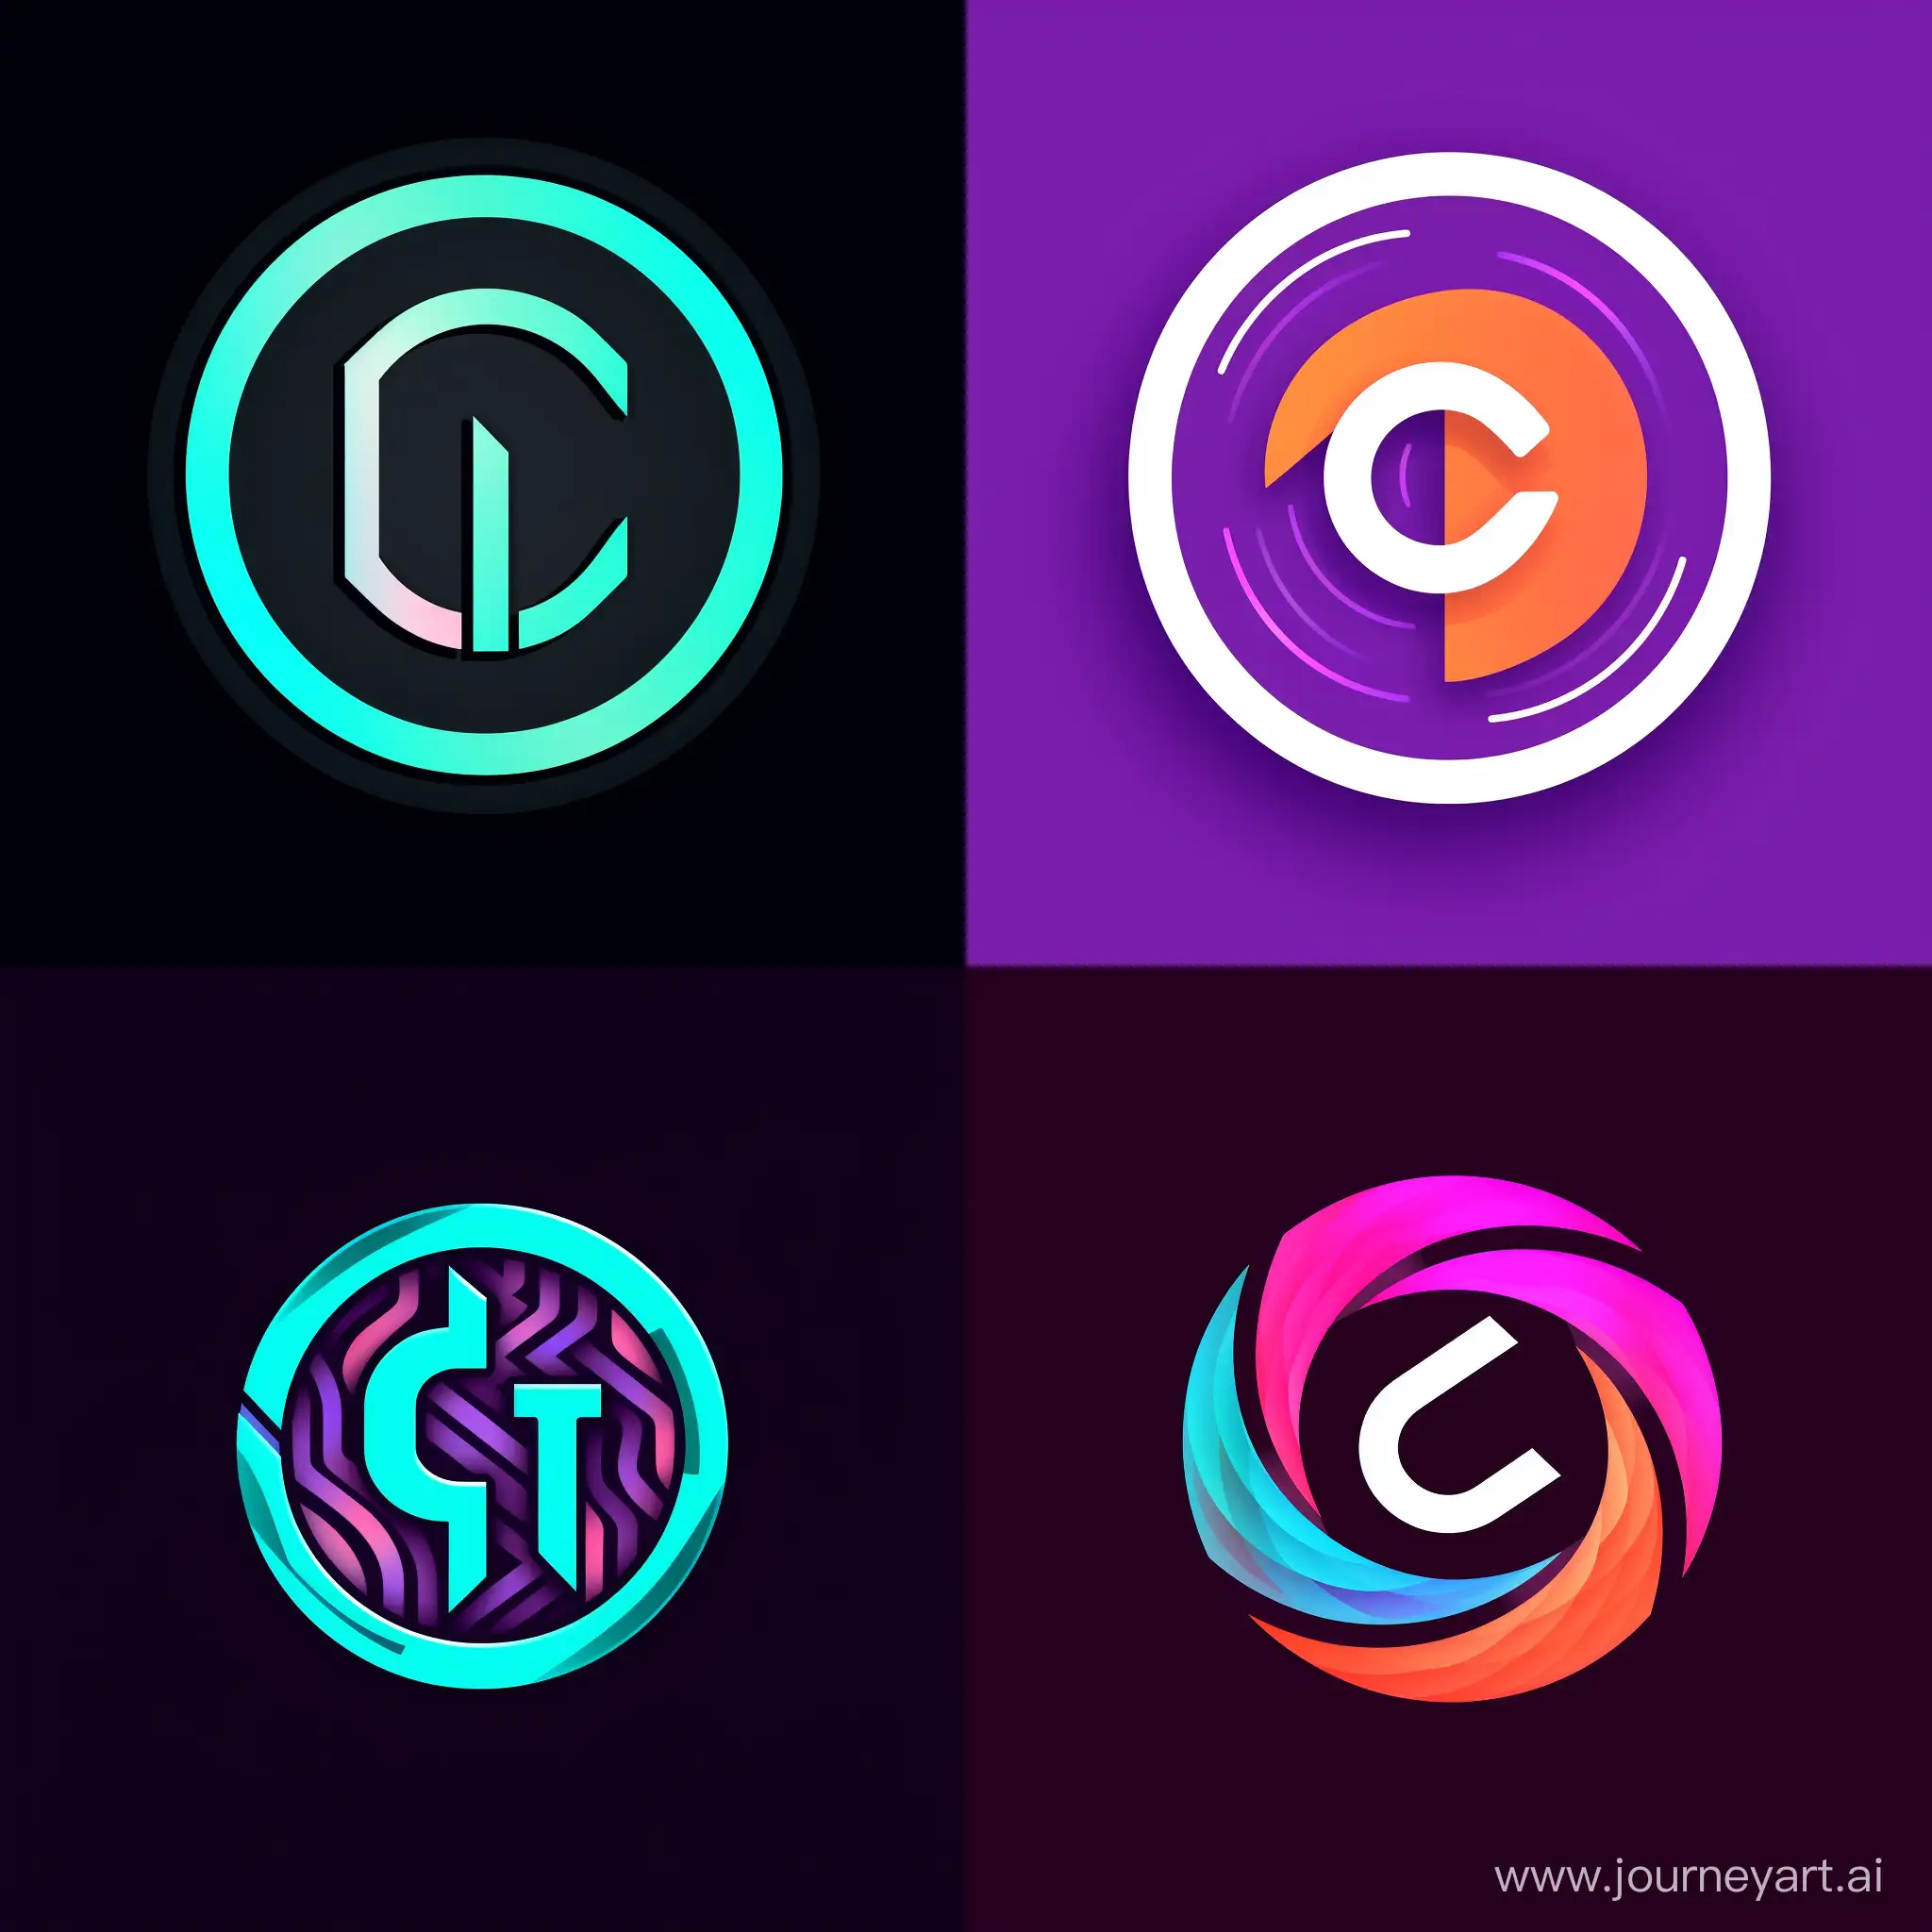 Futuristic-BlockchainInspired-Social-Network-Logo-Simplified-C-Design